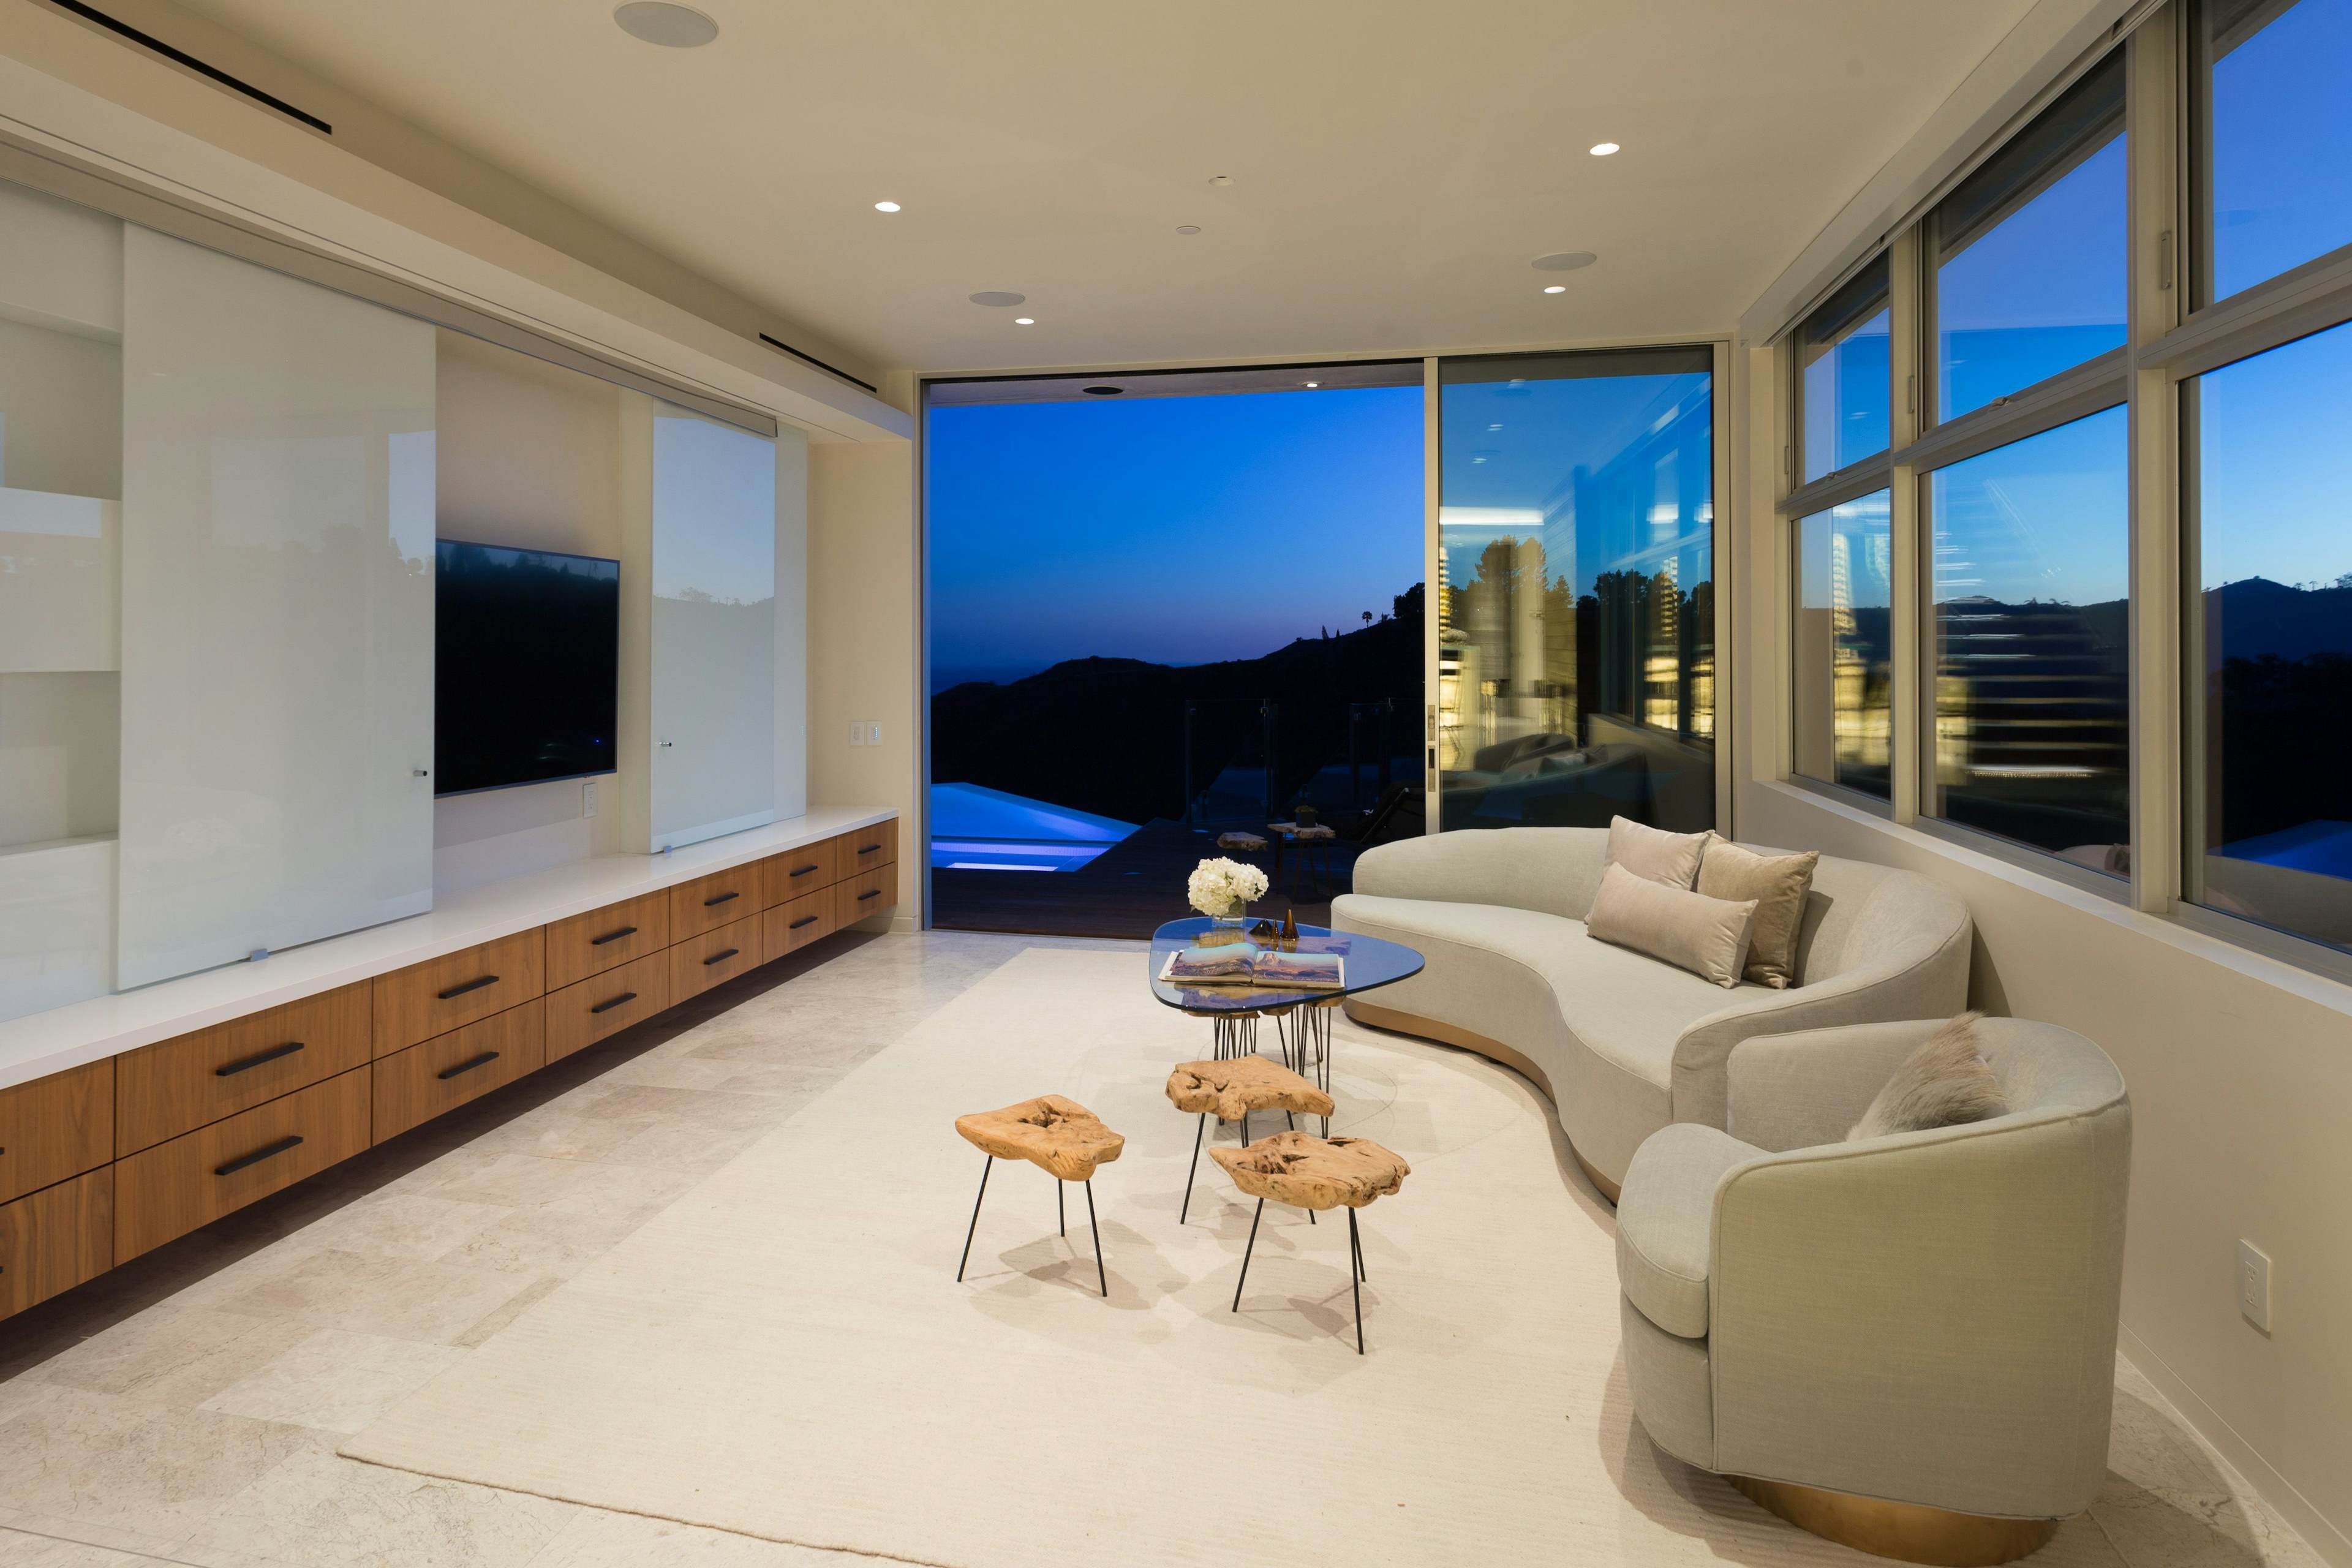 La Jolla's premium home renovation company